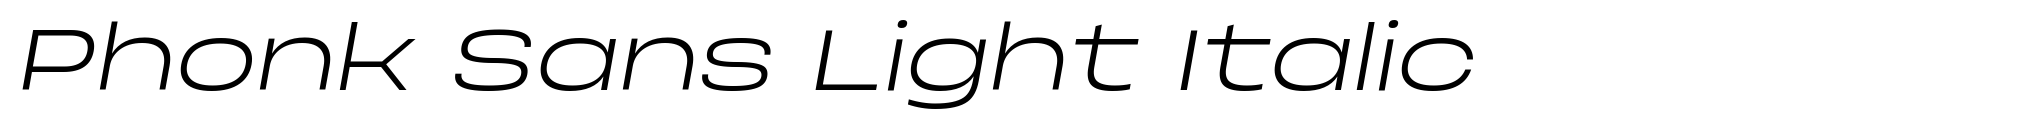 Phonk Sans Light Italic image